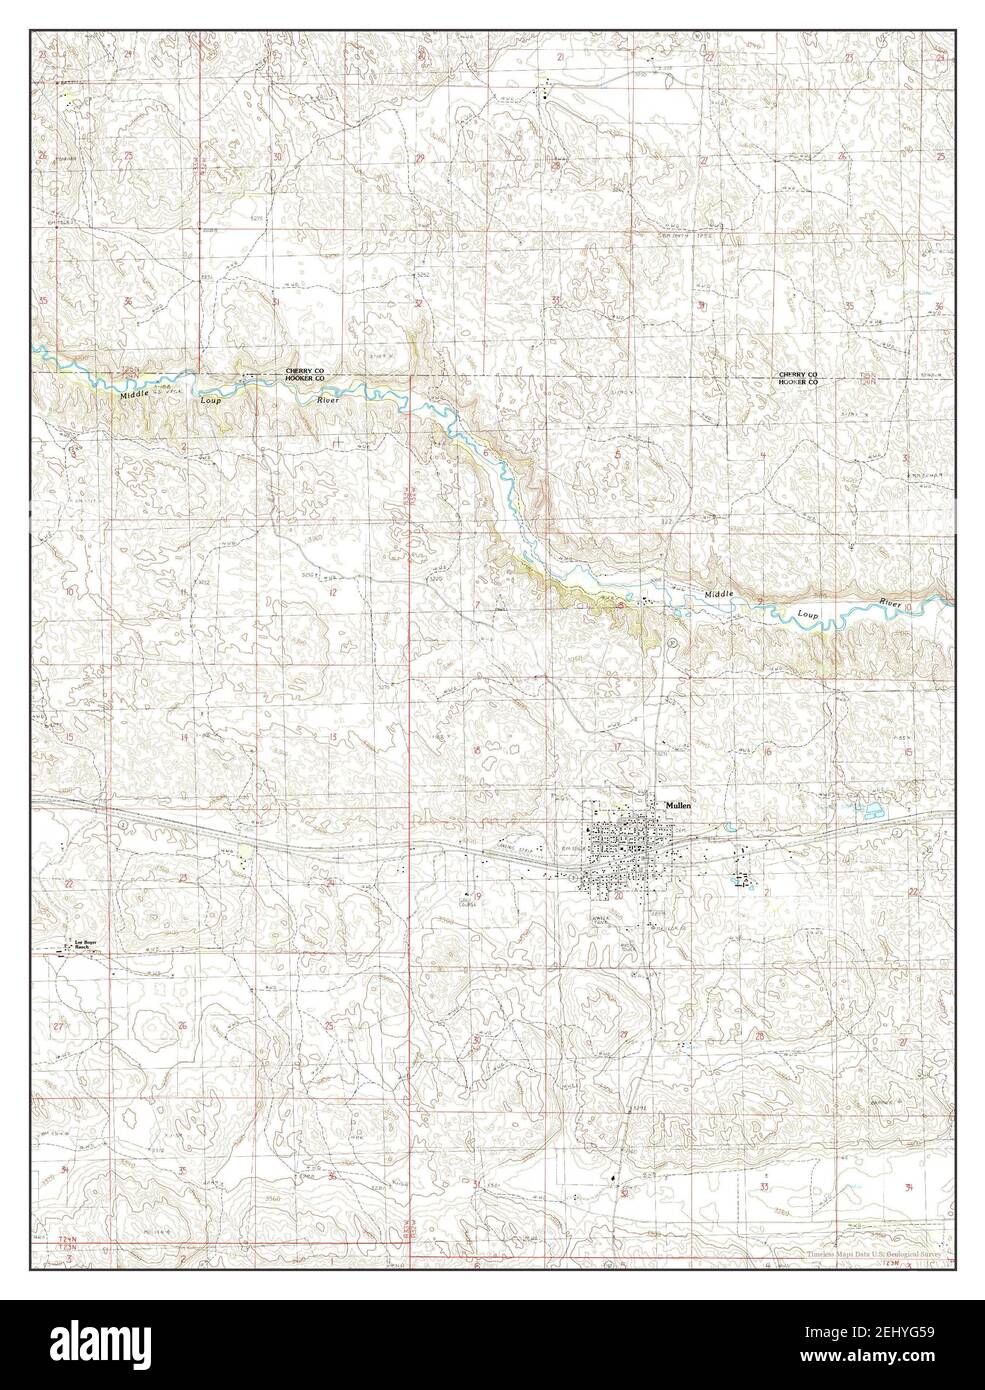 Mullen, Nebraska, map 1988, 1:24000, United States of America by Timeless Maps, data U.S. Geological Survey Stock Photo